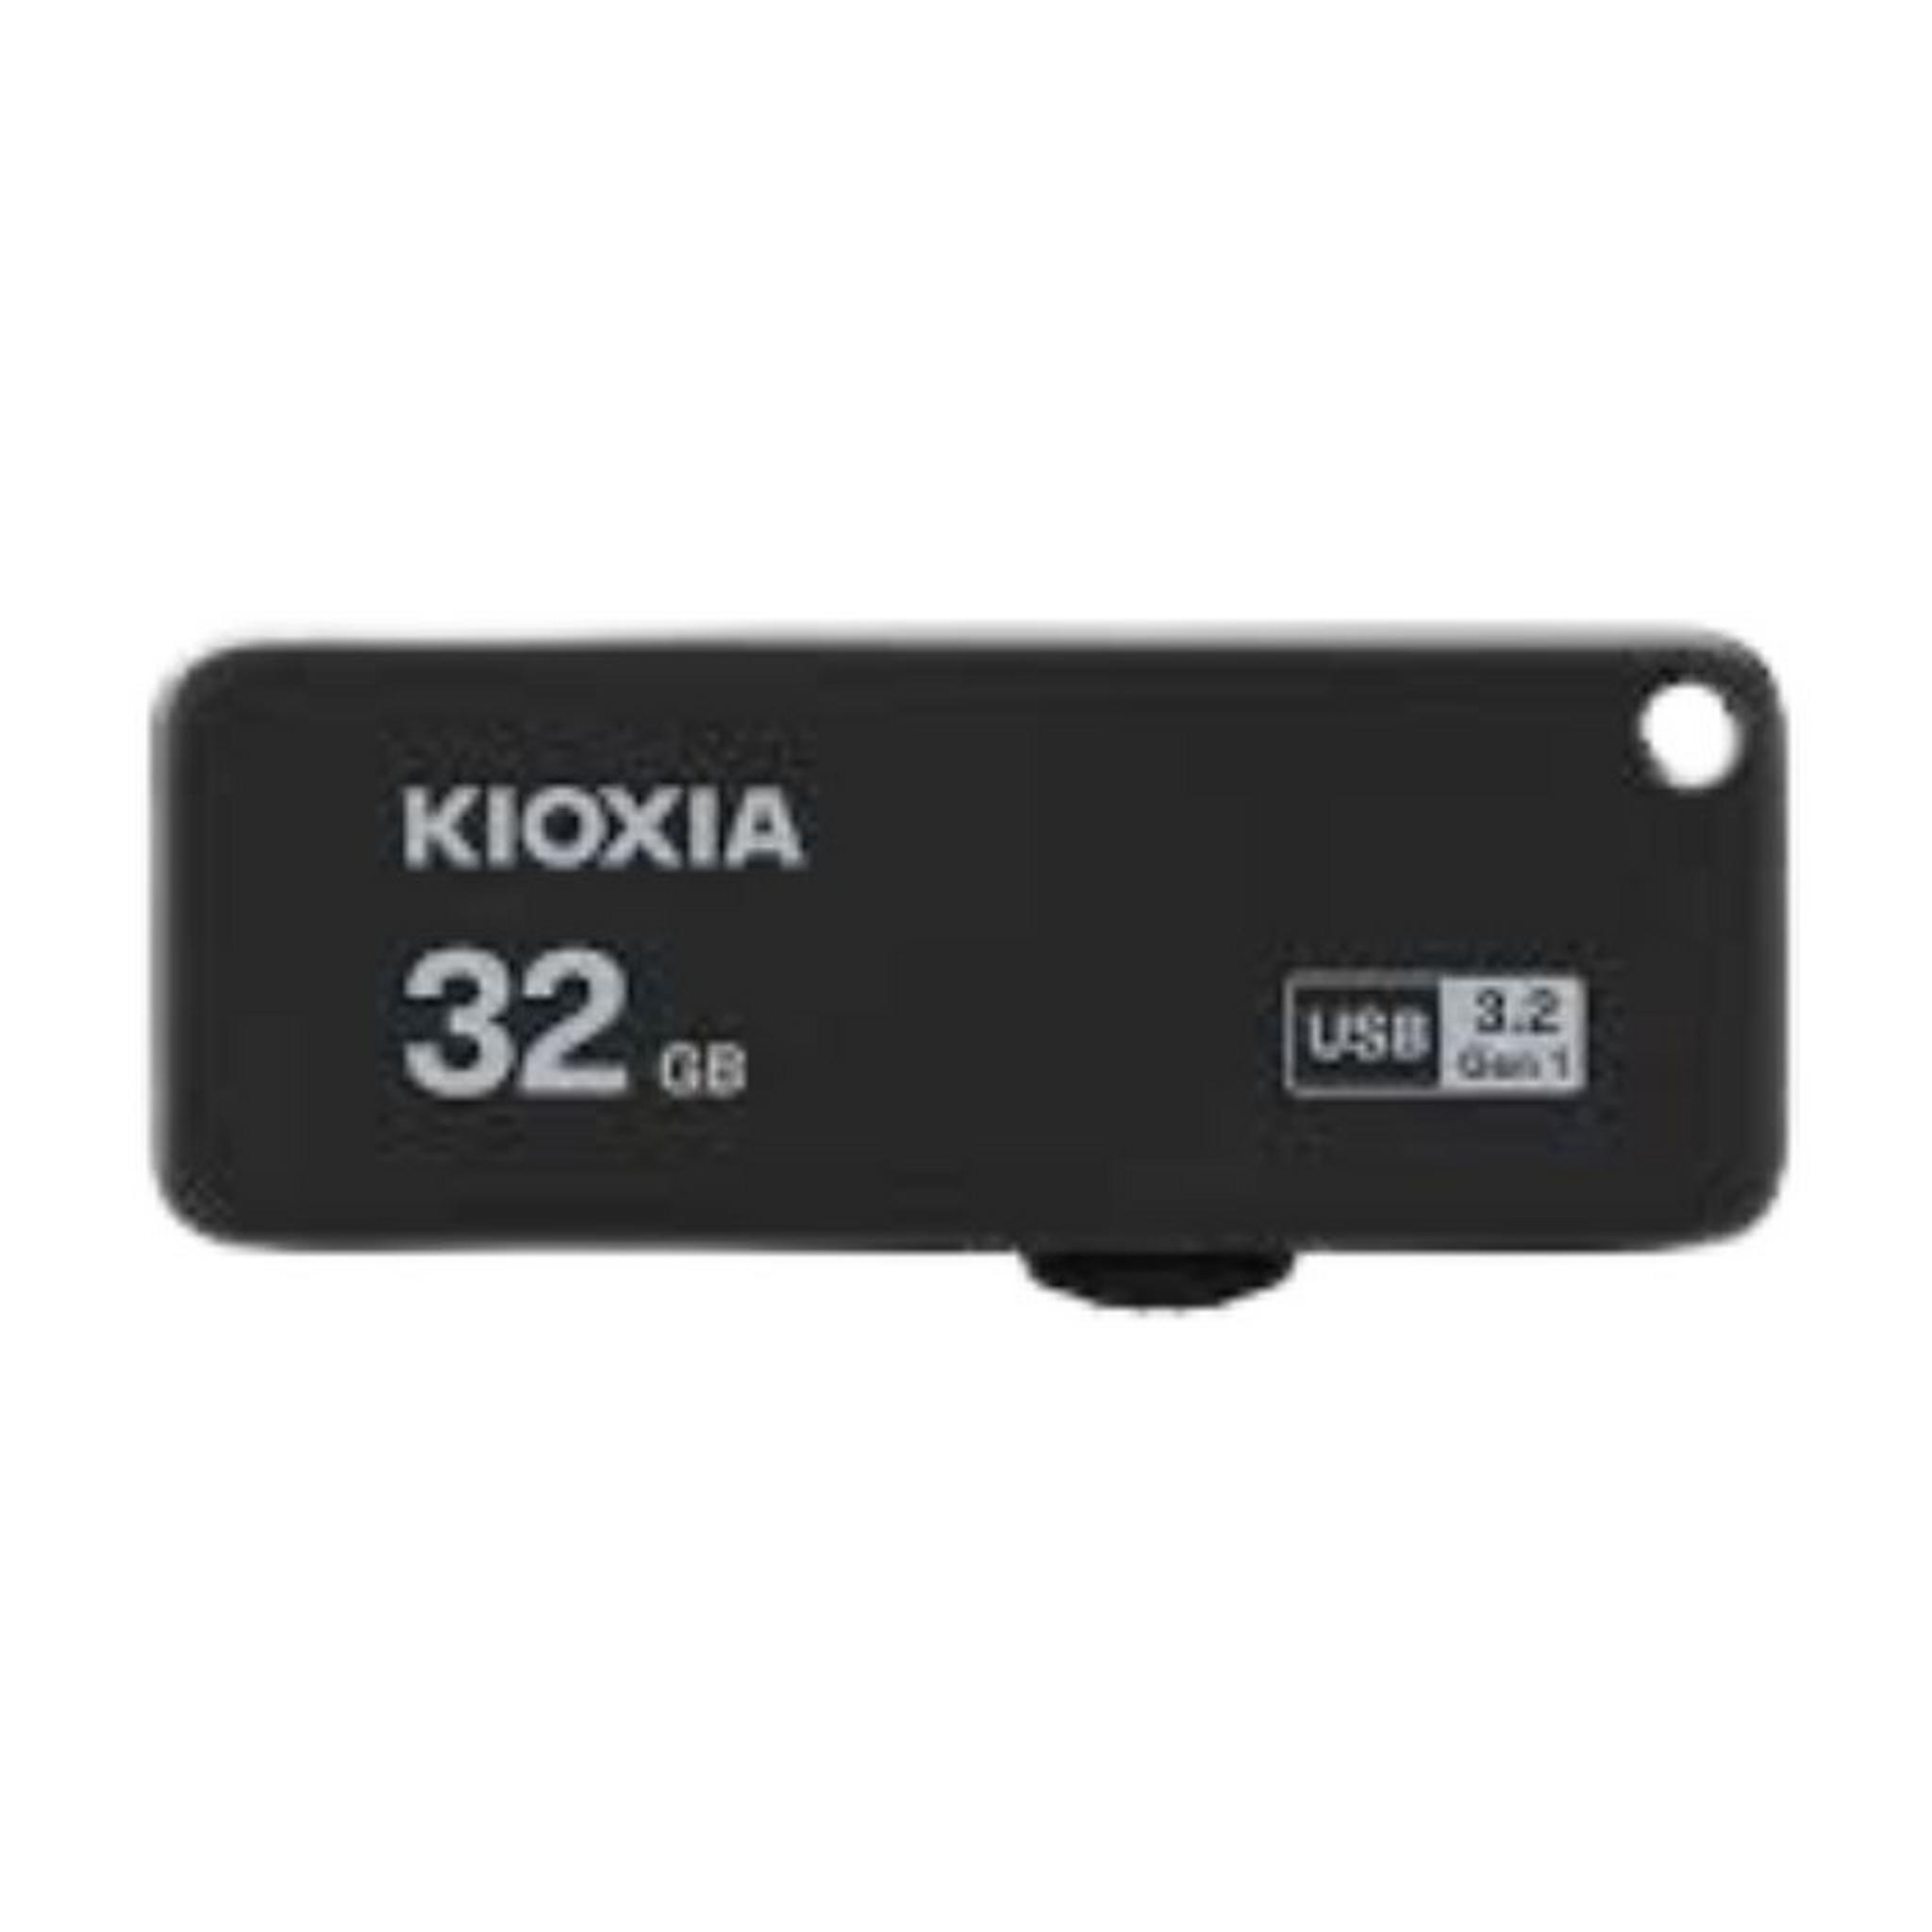 Kioxia TransMemory Flash Drive (U365K) - 32GB